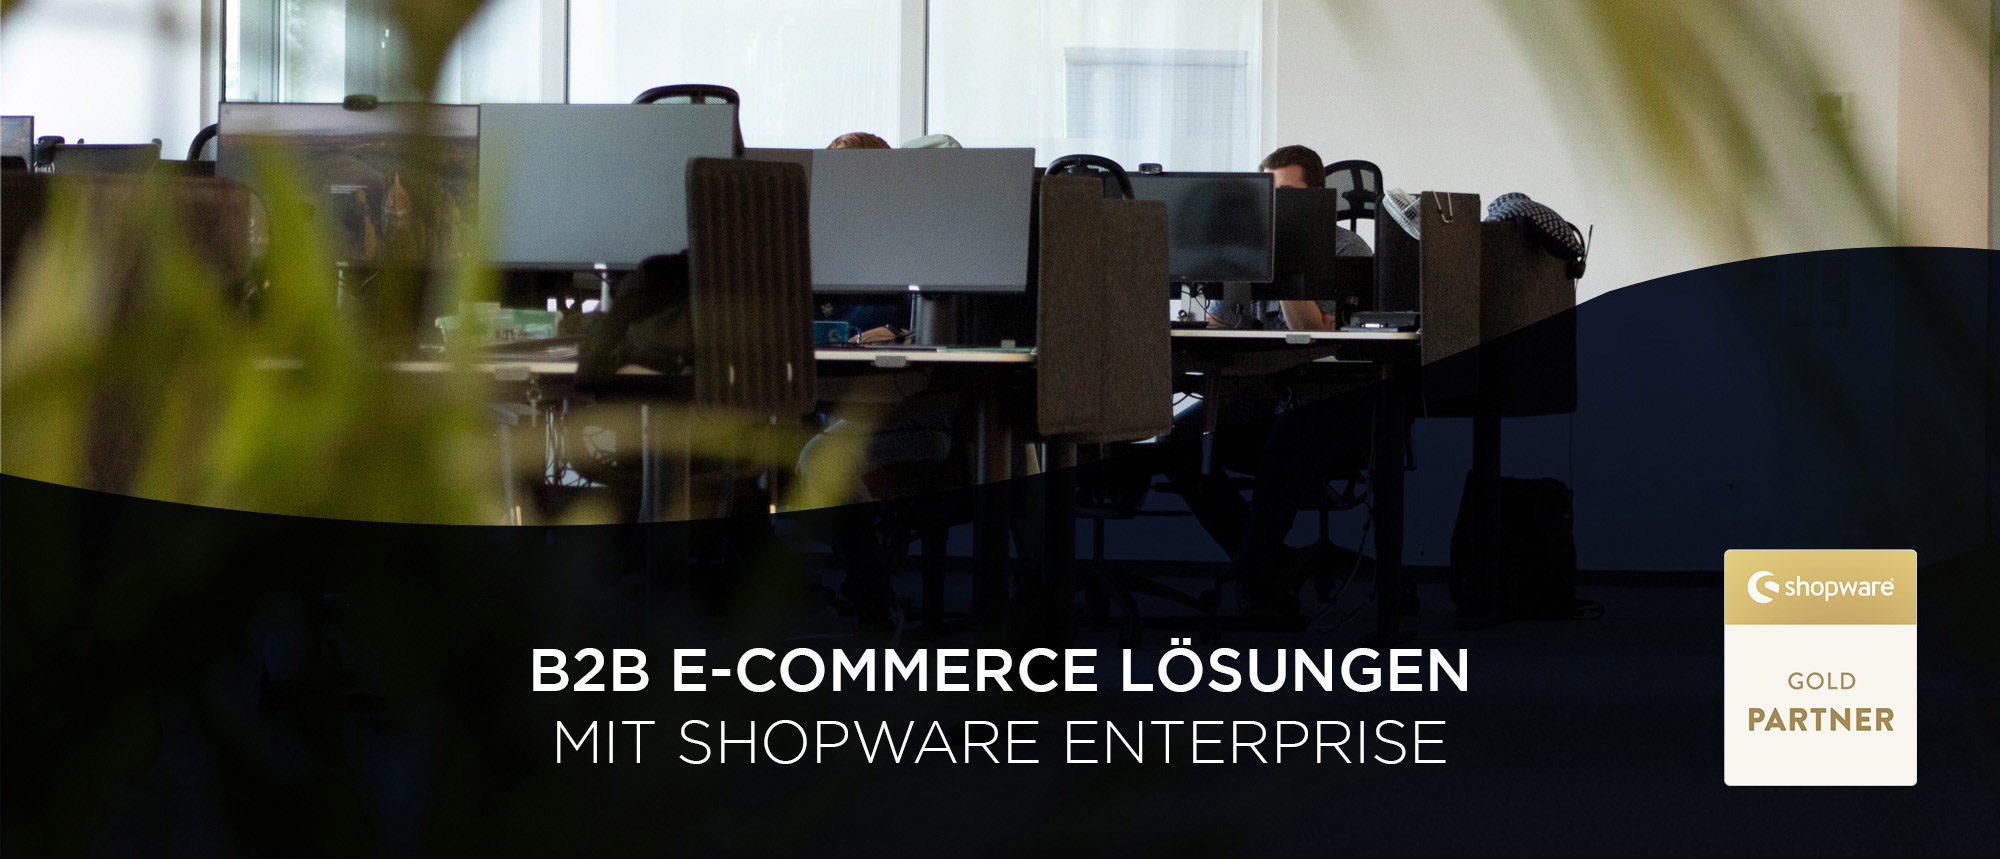 Kopfgrafik B2B E-Commerce Lösungen Shopware Enterprise